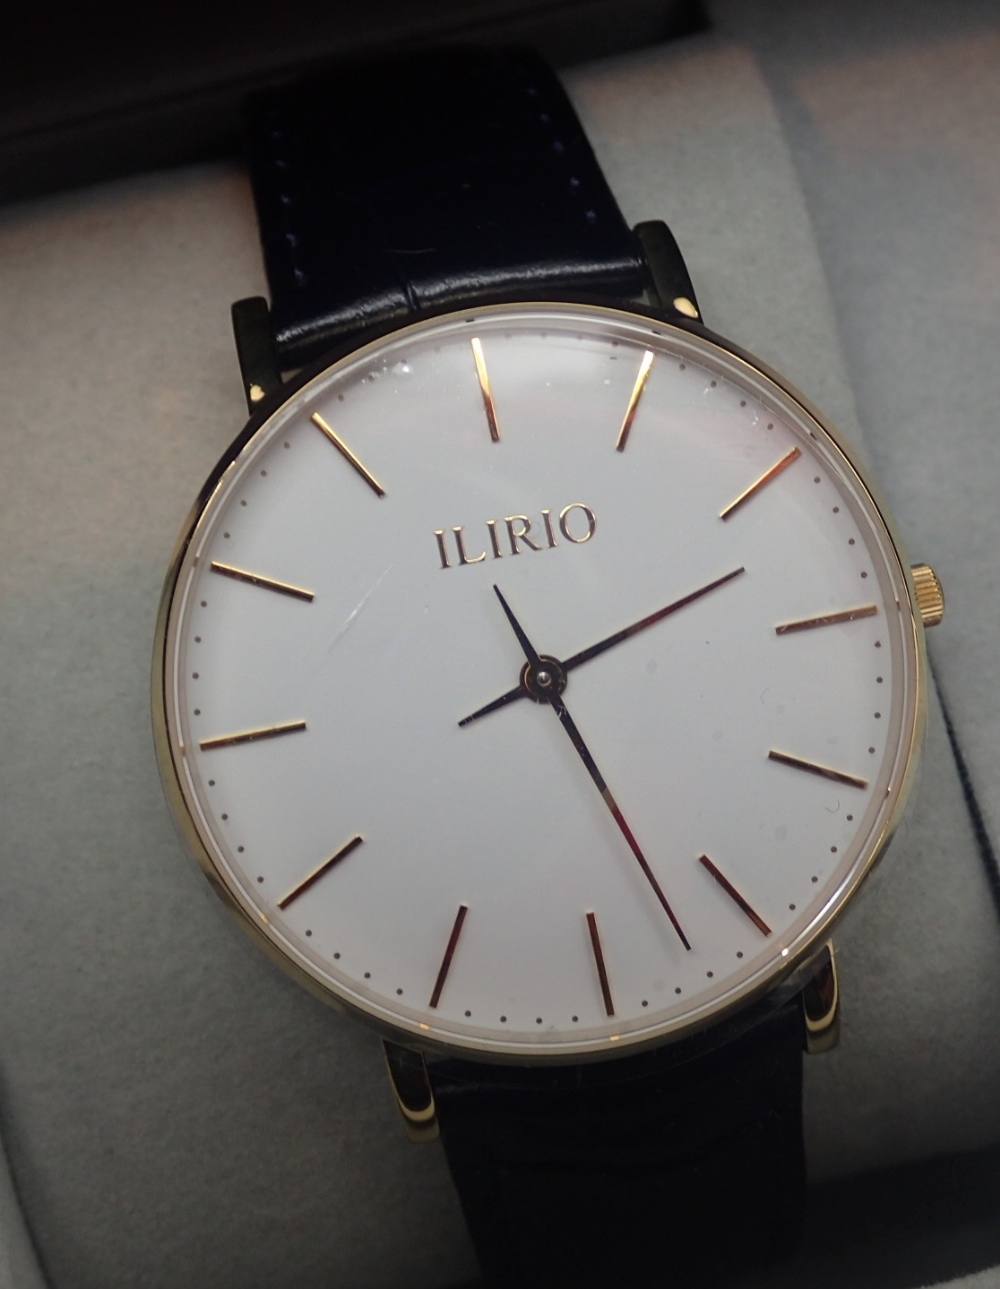 New and boxed gents Ilirio wristwatch